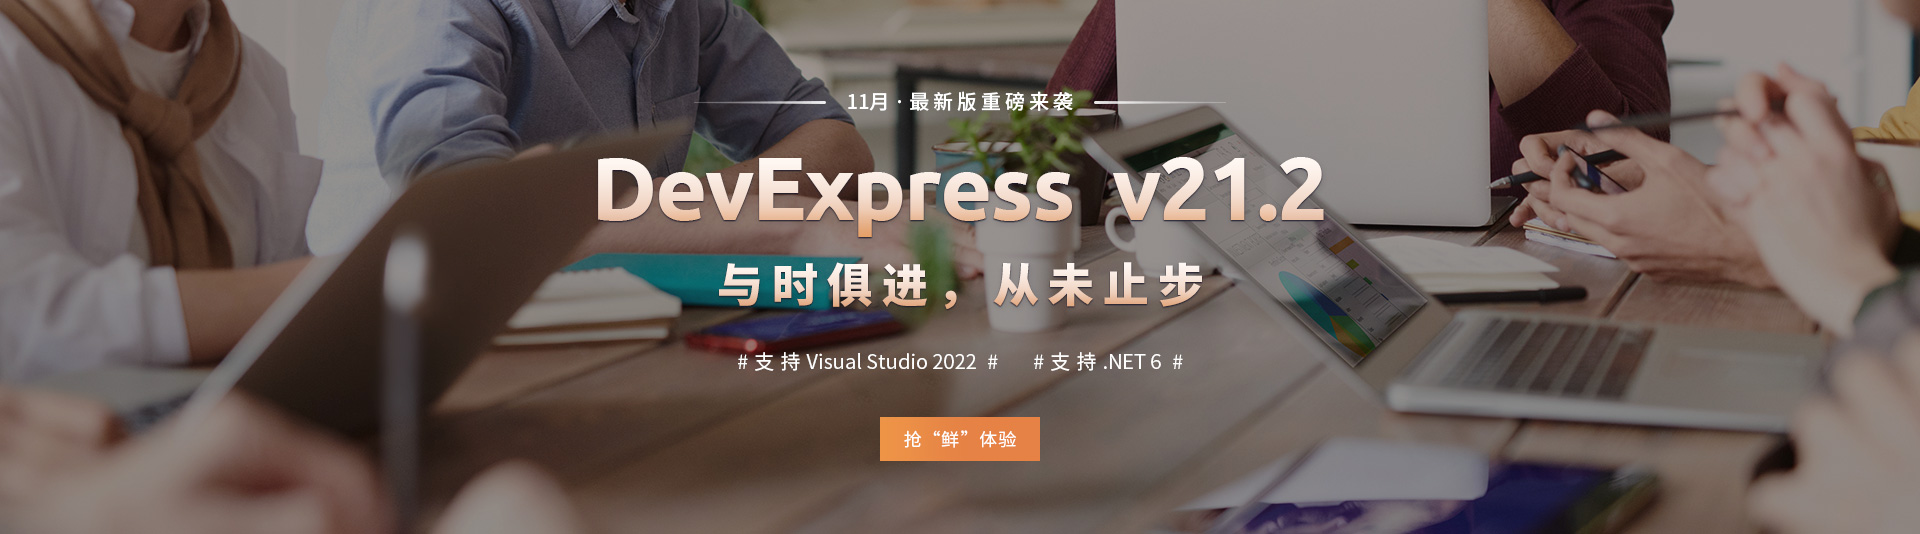 DevExpress v21.2新版本重磅发布